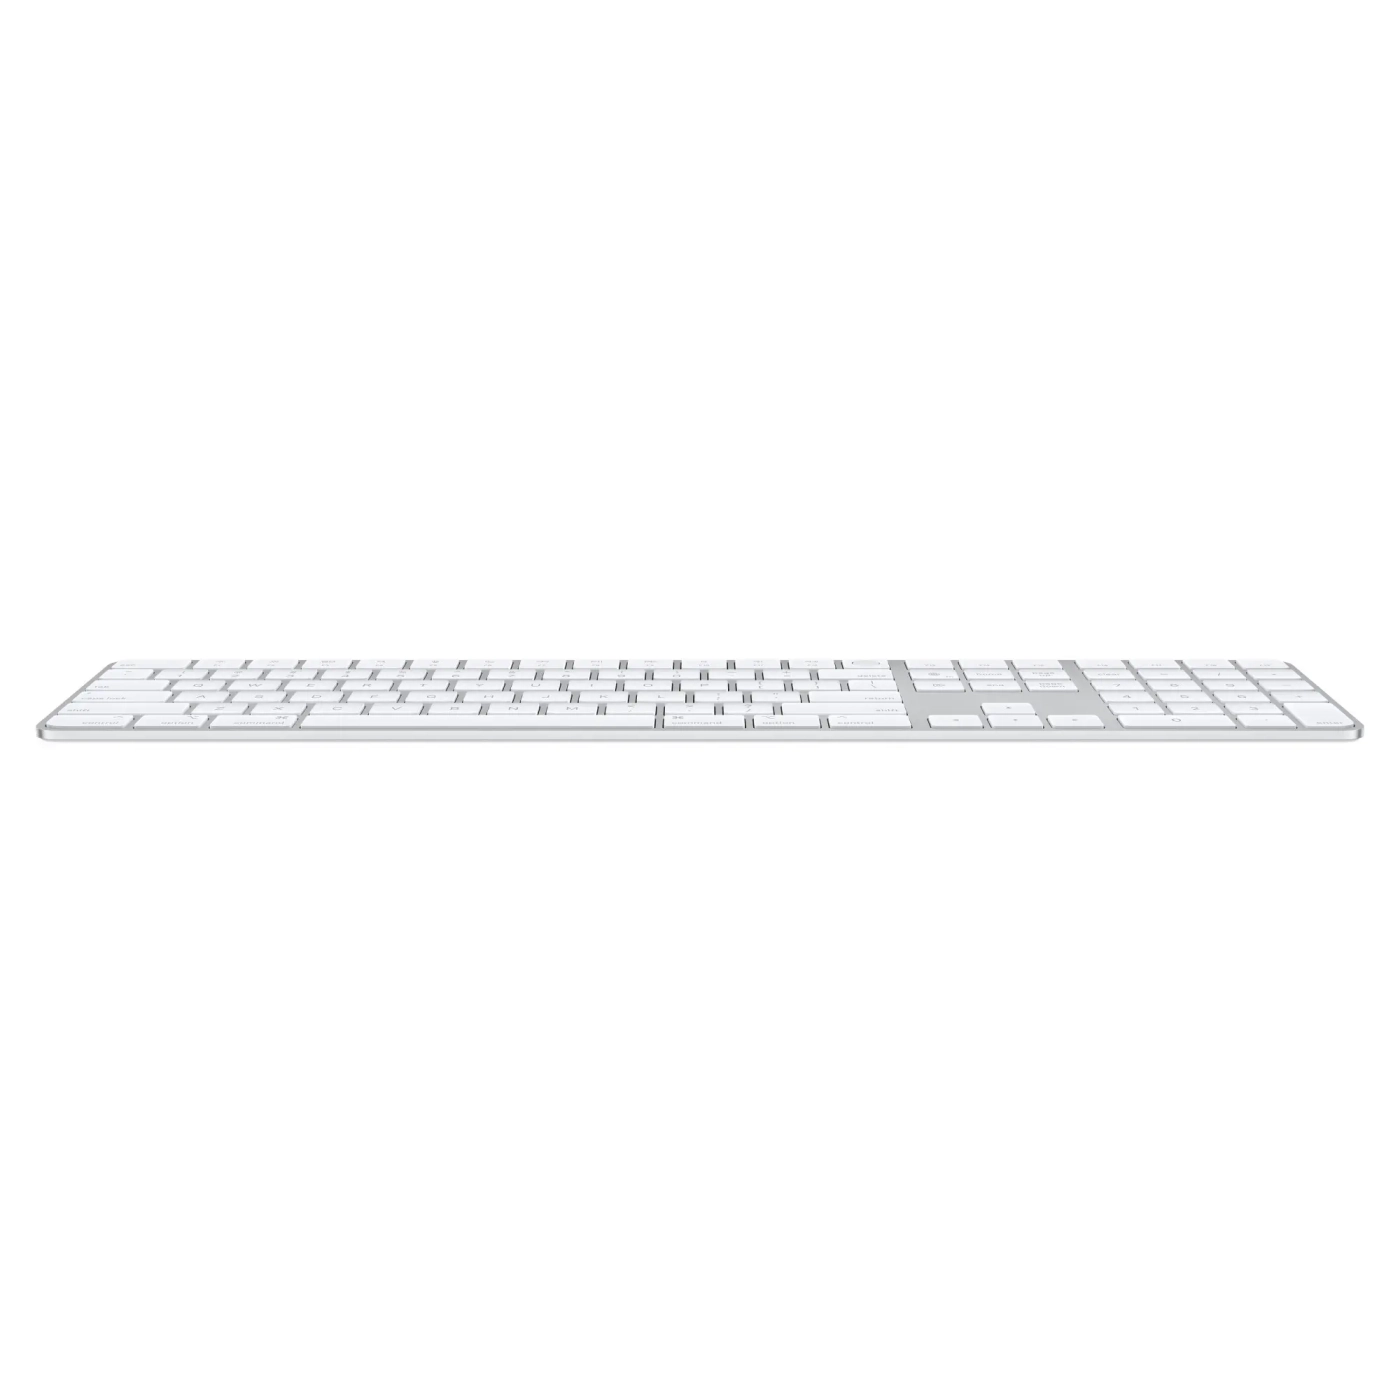 Купить Клавиатура Apple Magic Keyboard с Touch ID и цифровой панелью White - фото 3